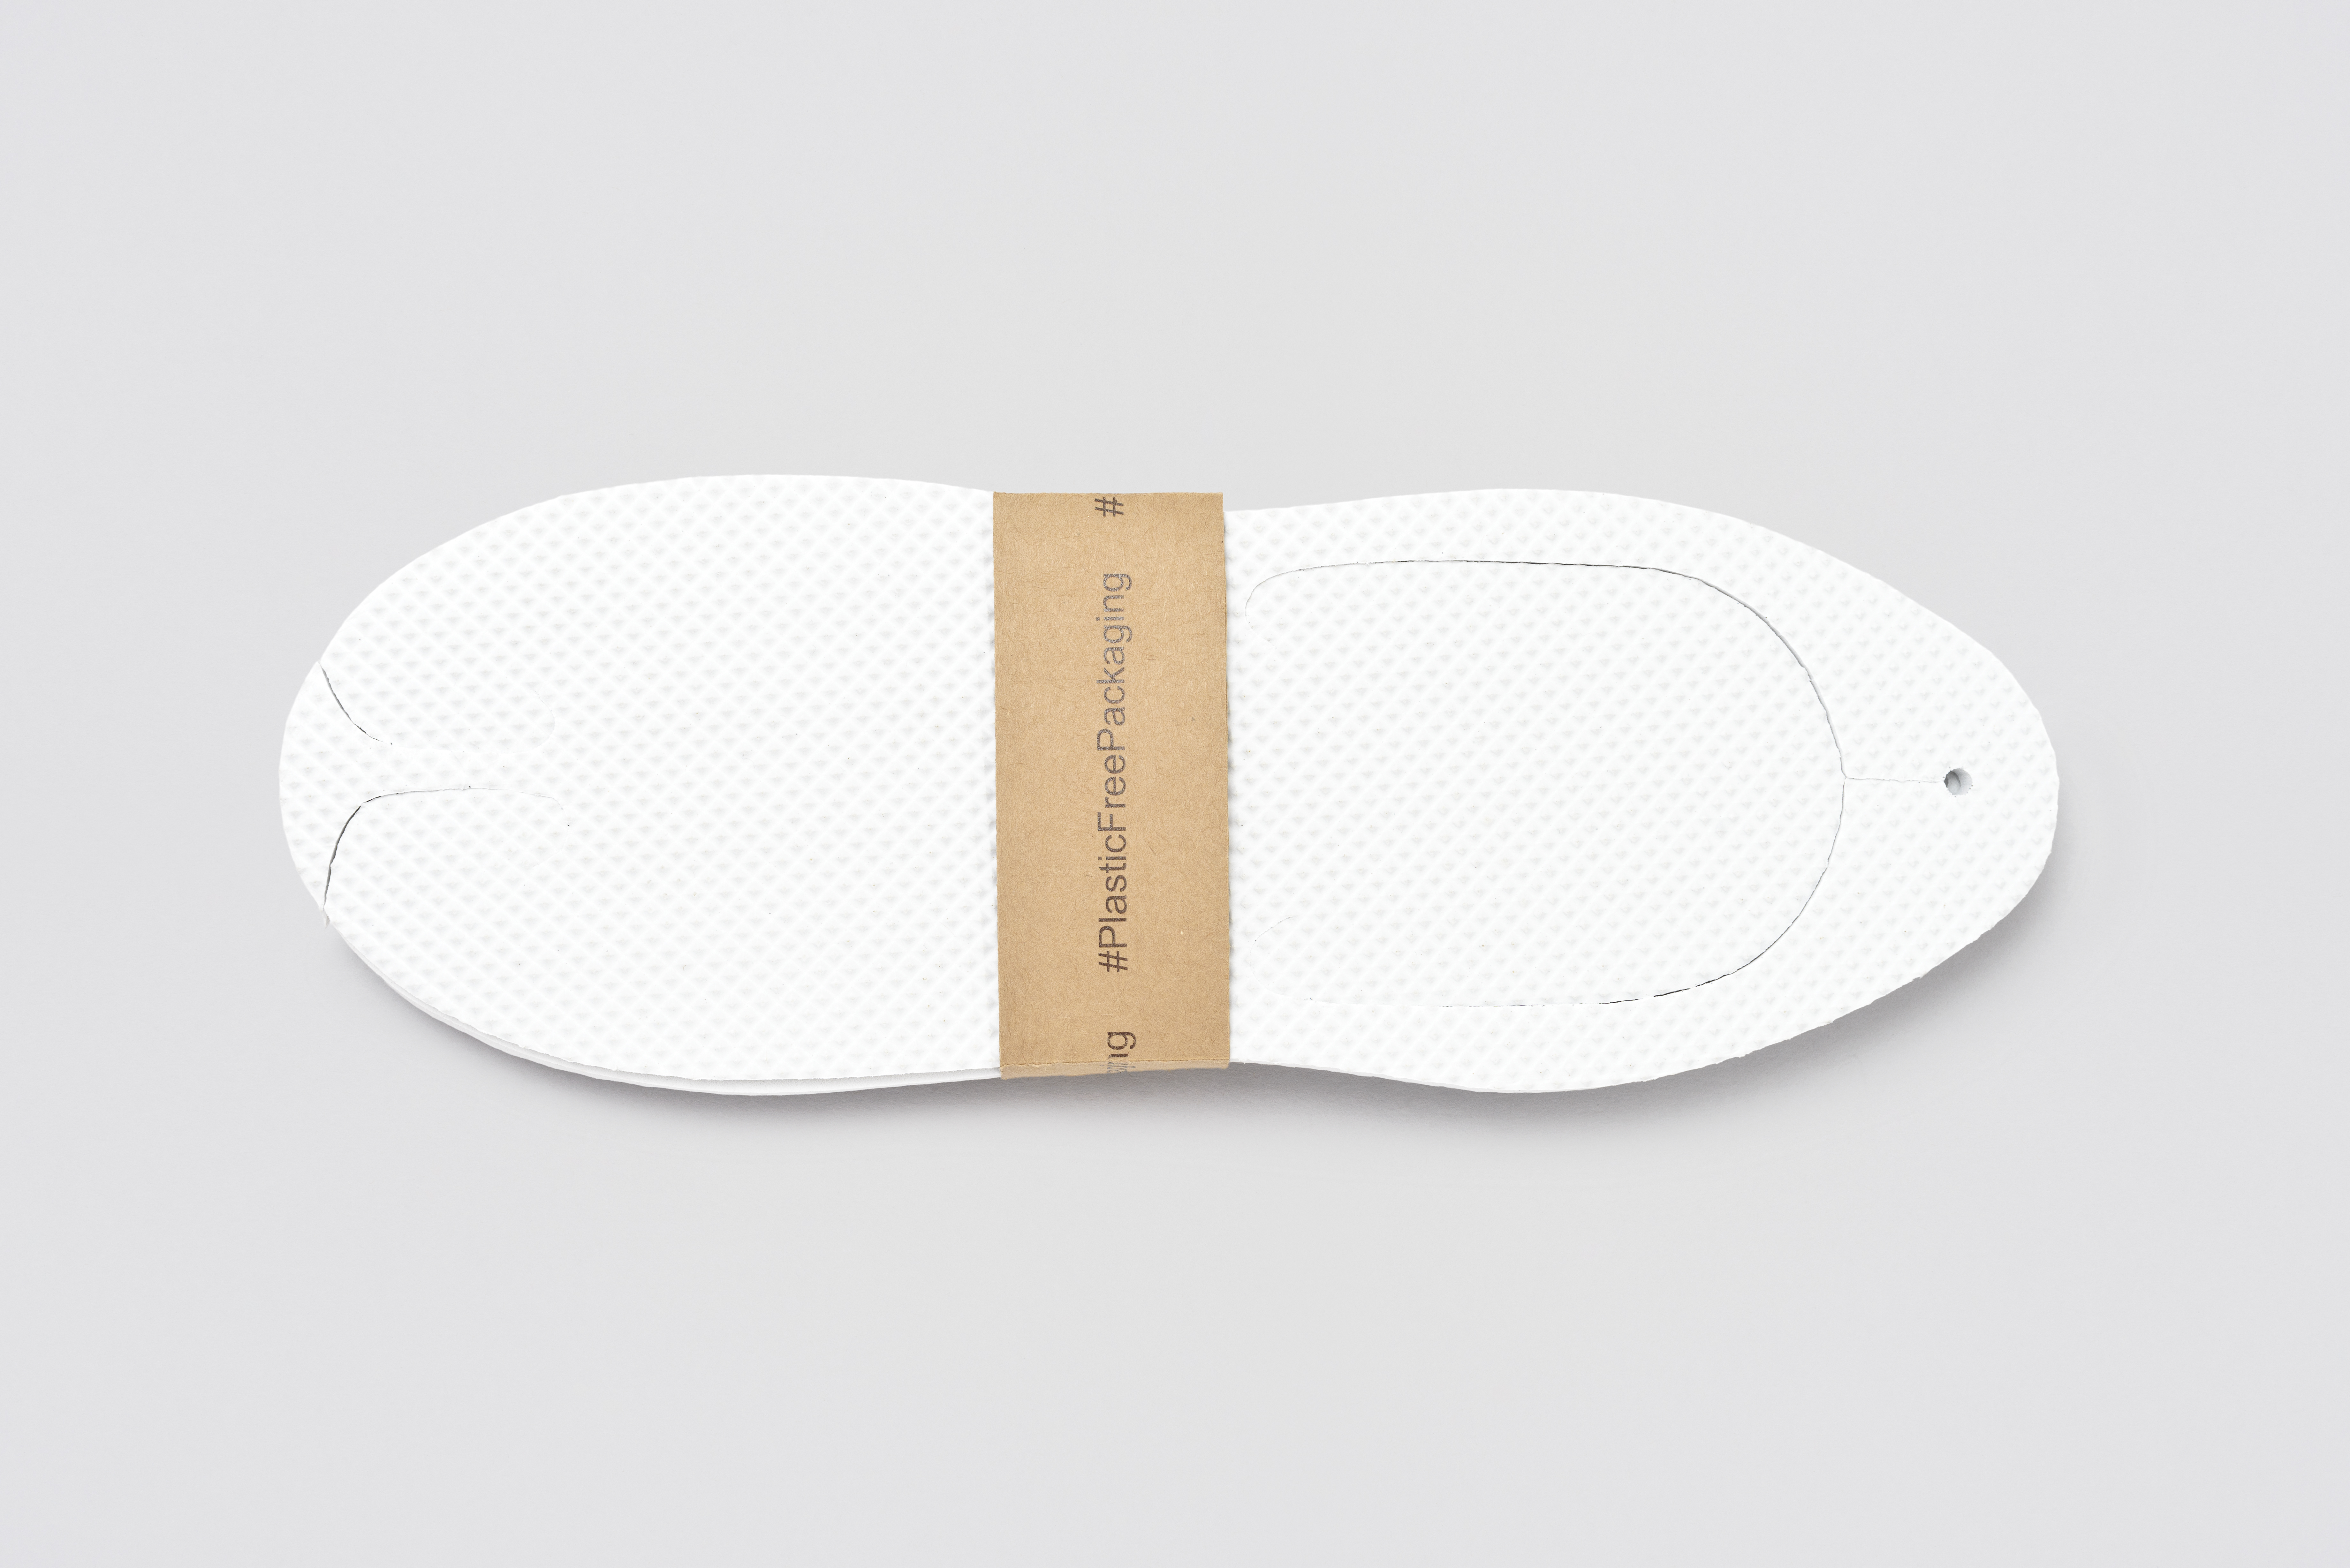 Hammam Sandal, weiß, Größe 28,2cm, #PlasticFreePackaging